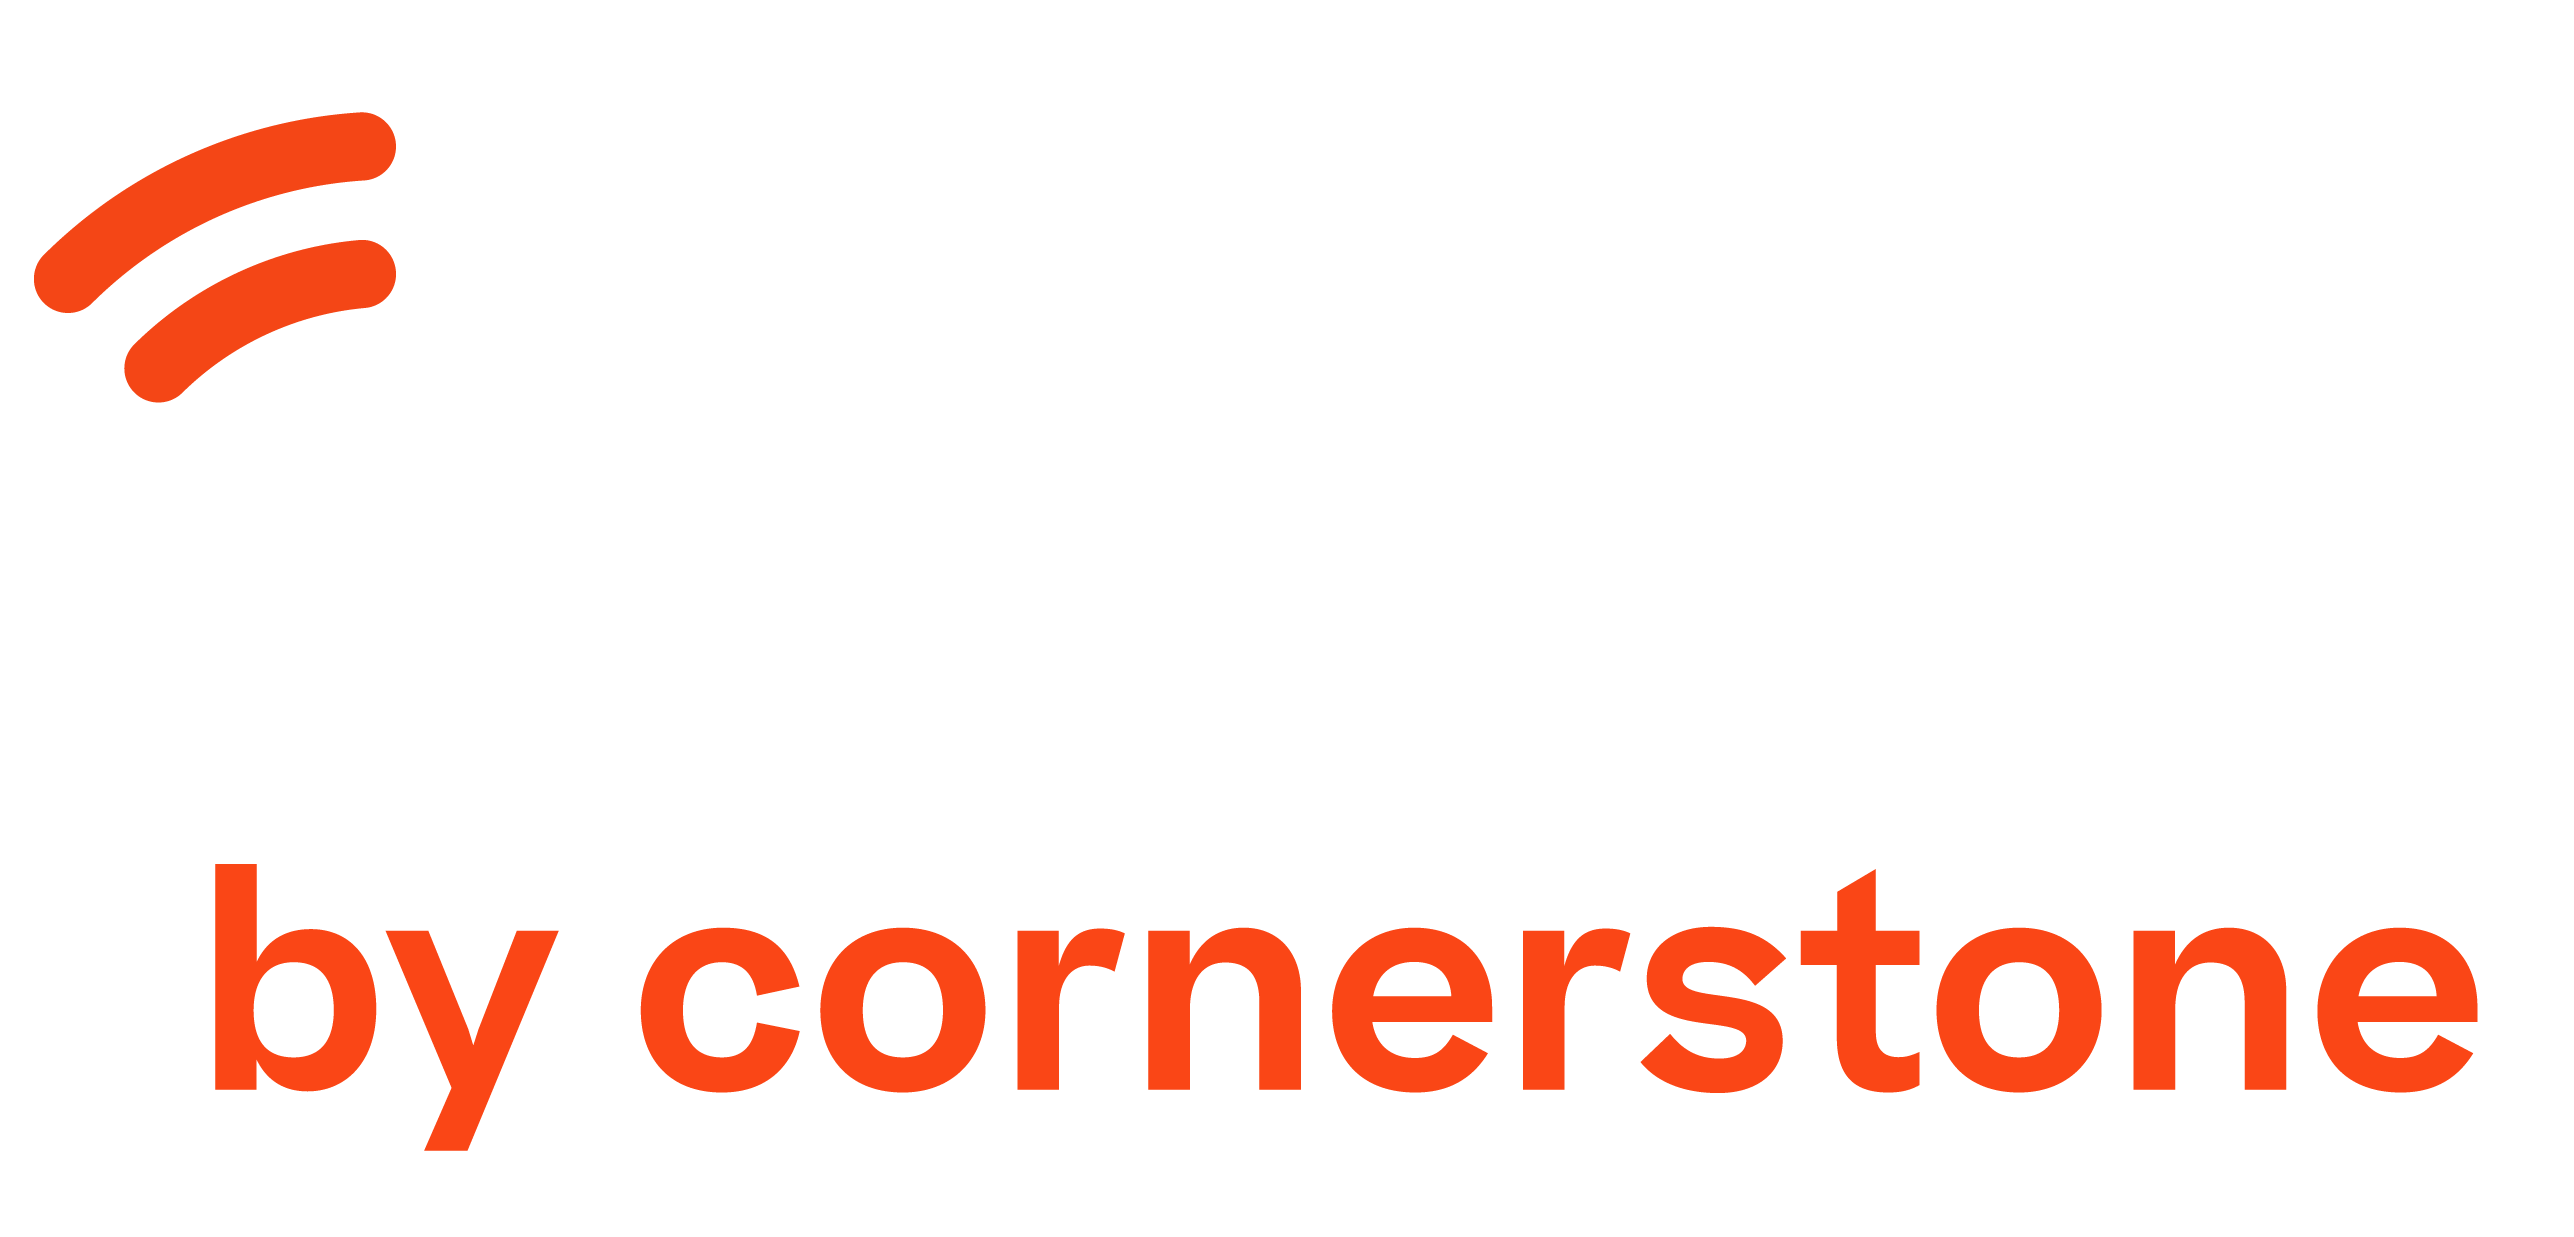 Edcast-by-Cornerstone-logo_image